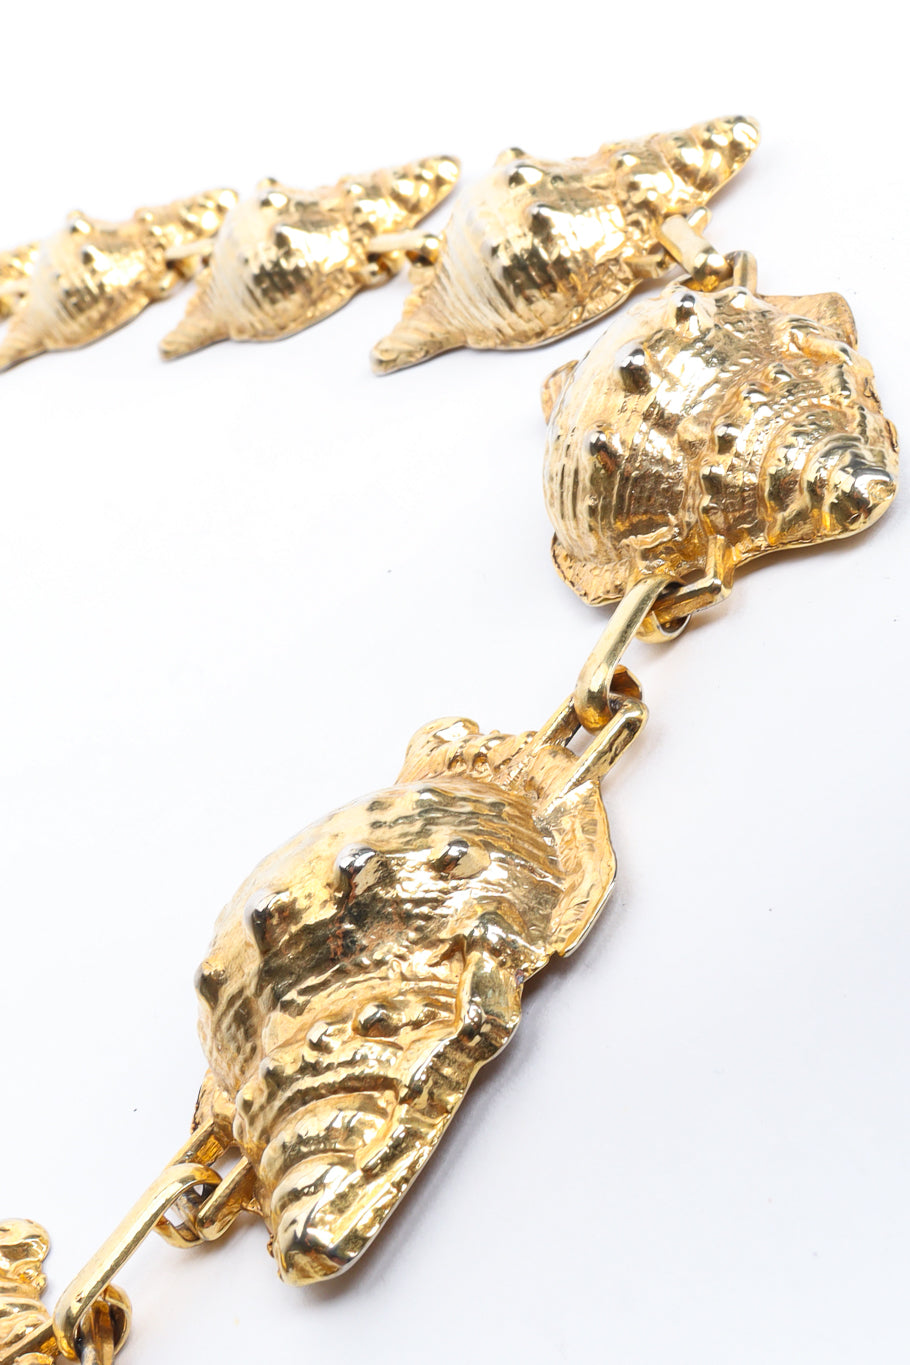 Gold metal conch shell close up backside shells @recessla